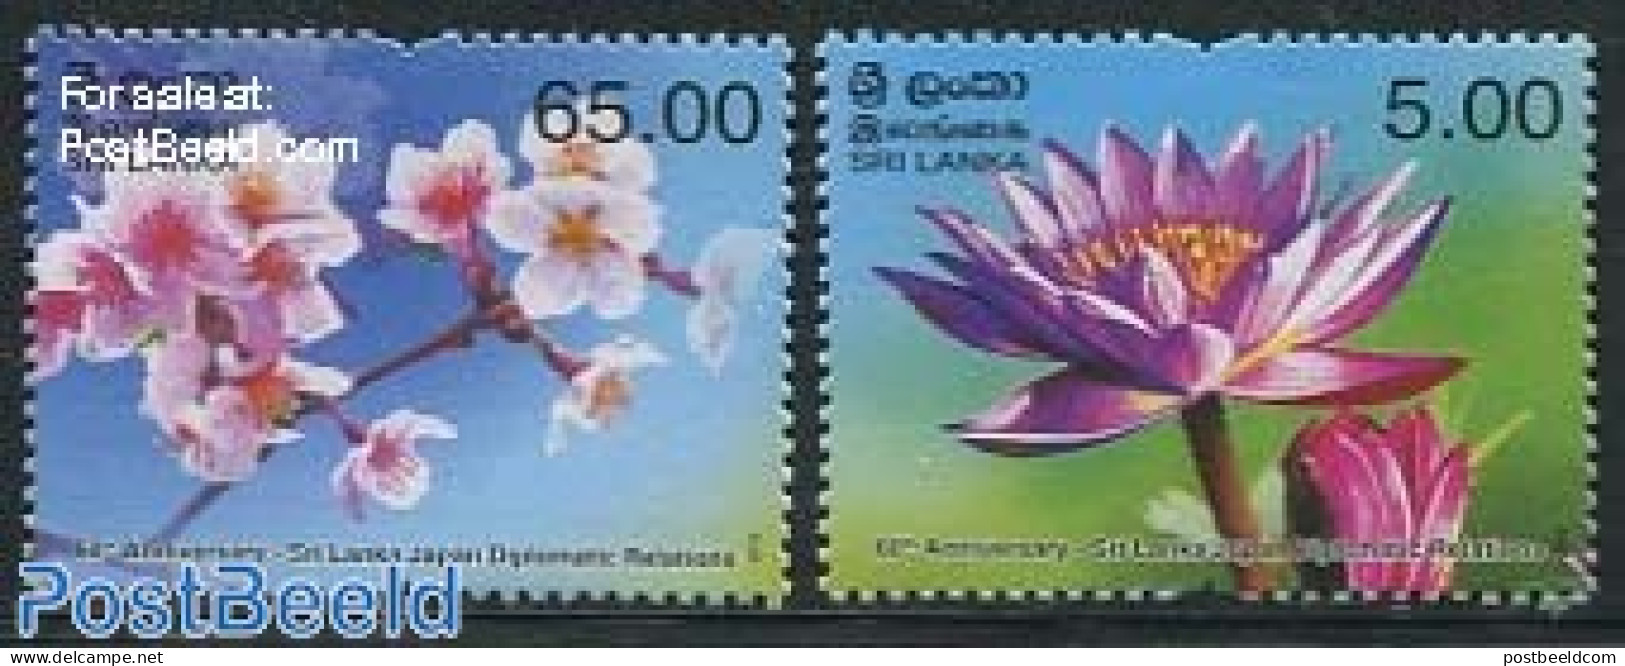 Sri Lanka (Ceylon) 2012 Diplomatic Relations With Japan 2v, Mint NH, Nature - Flowers & Plants - Sri Lanka (Ceylon) (1948-...)